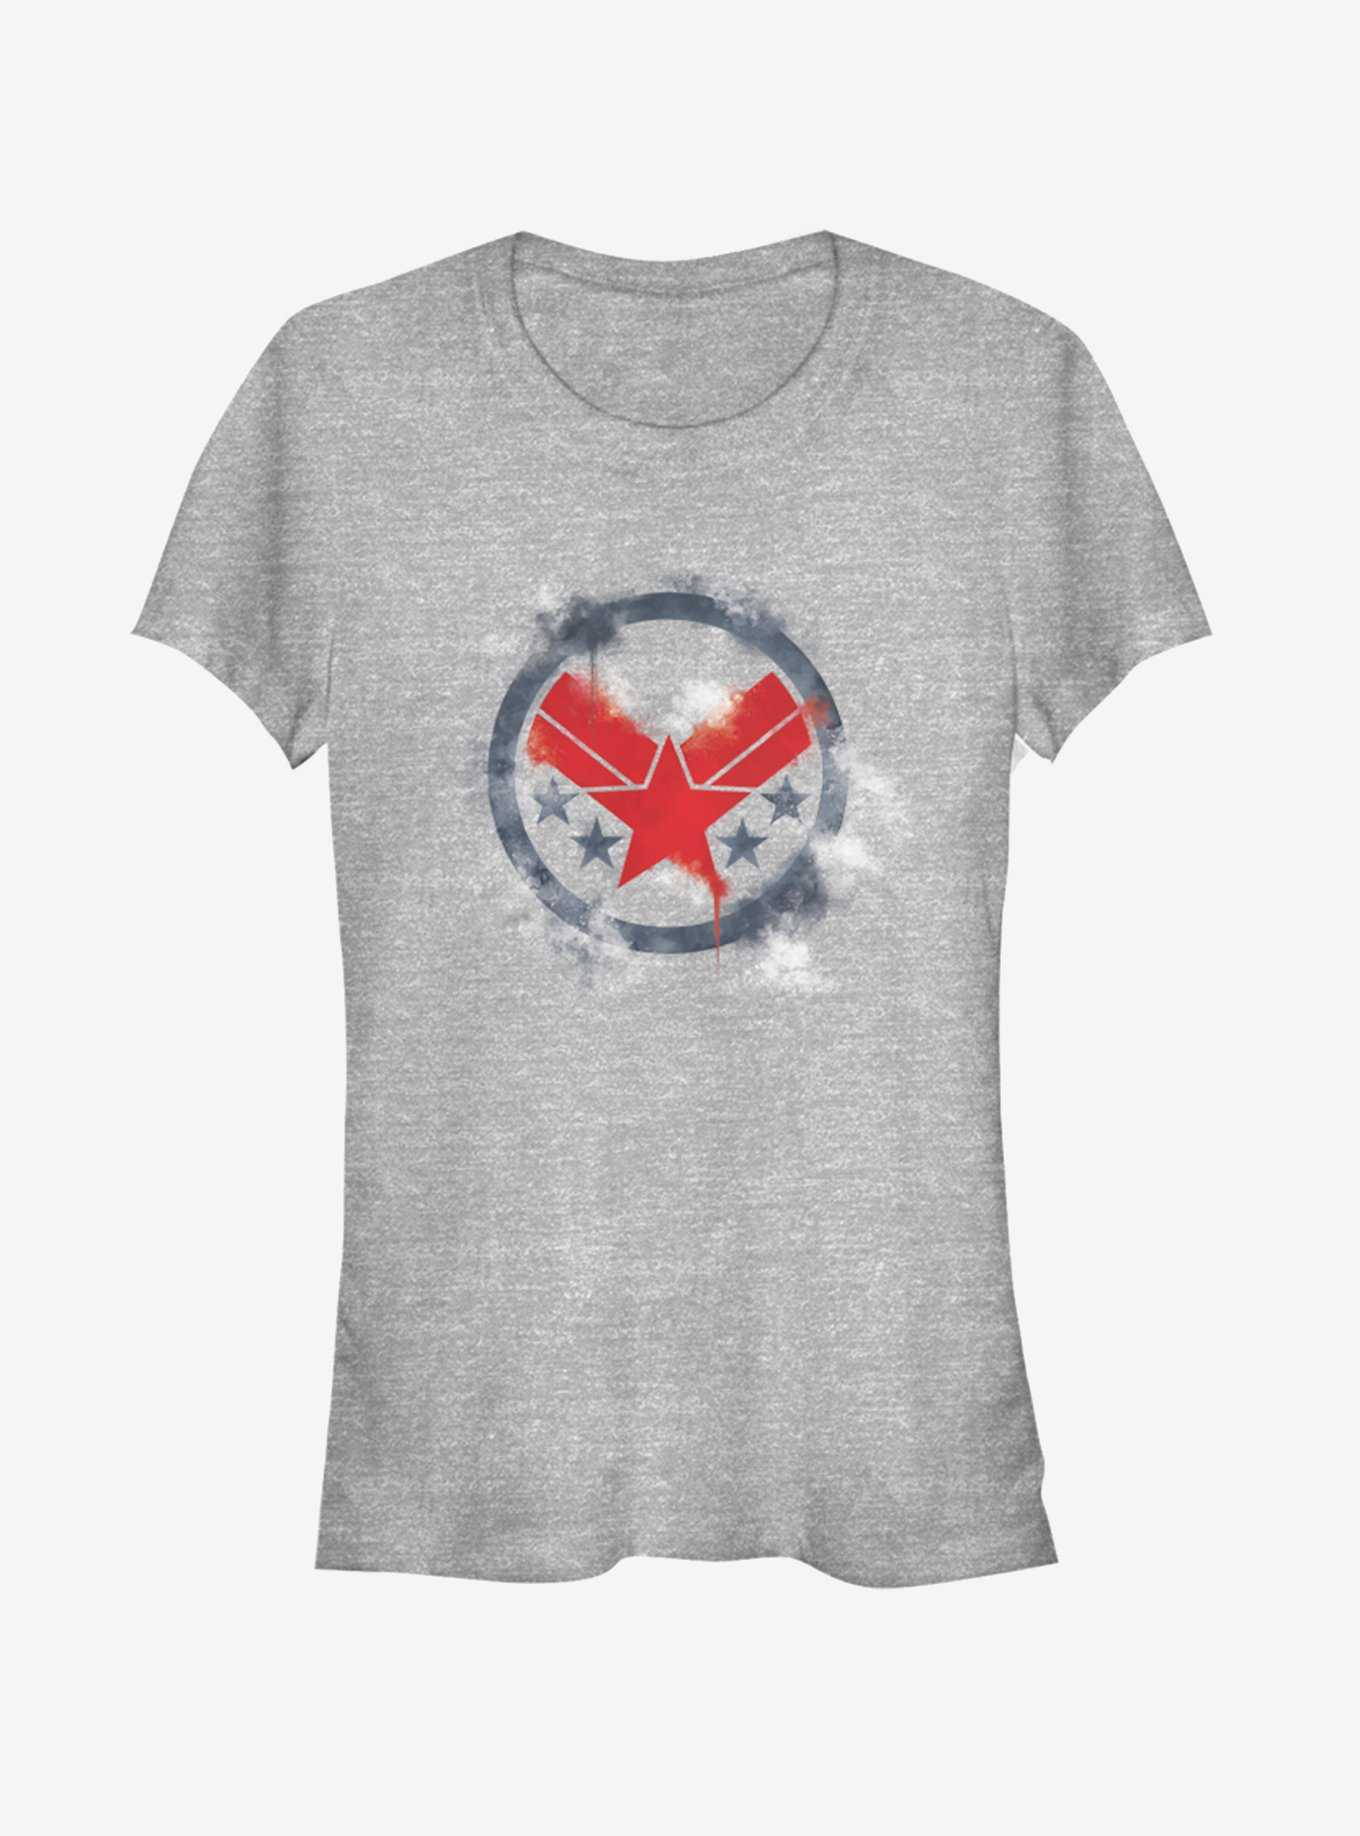 Marvel Avengers: Endgame War Machine Spray Logo Girls Heathered T-Shirt, , hi-res